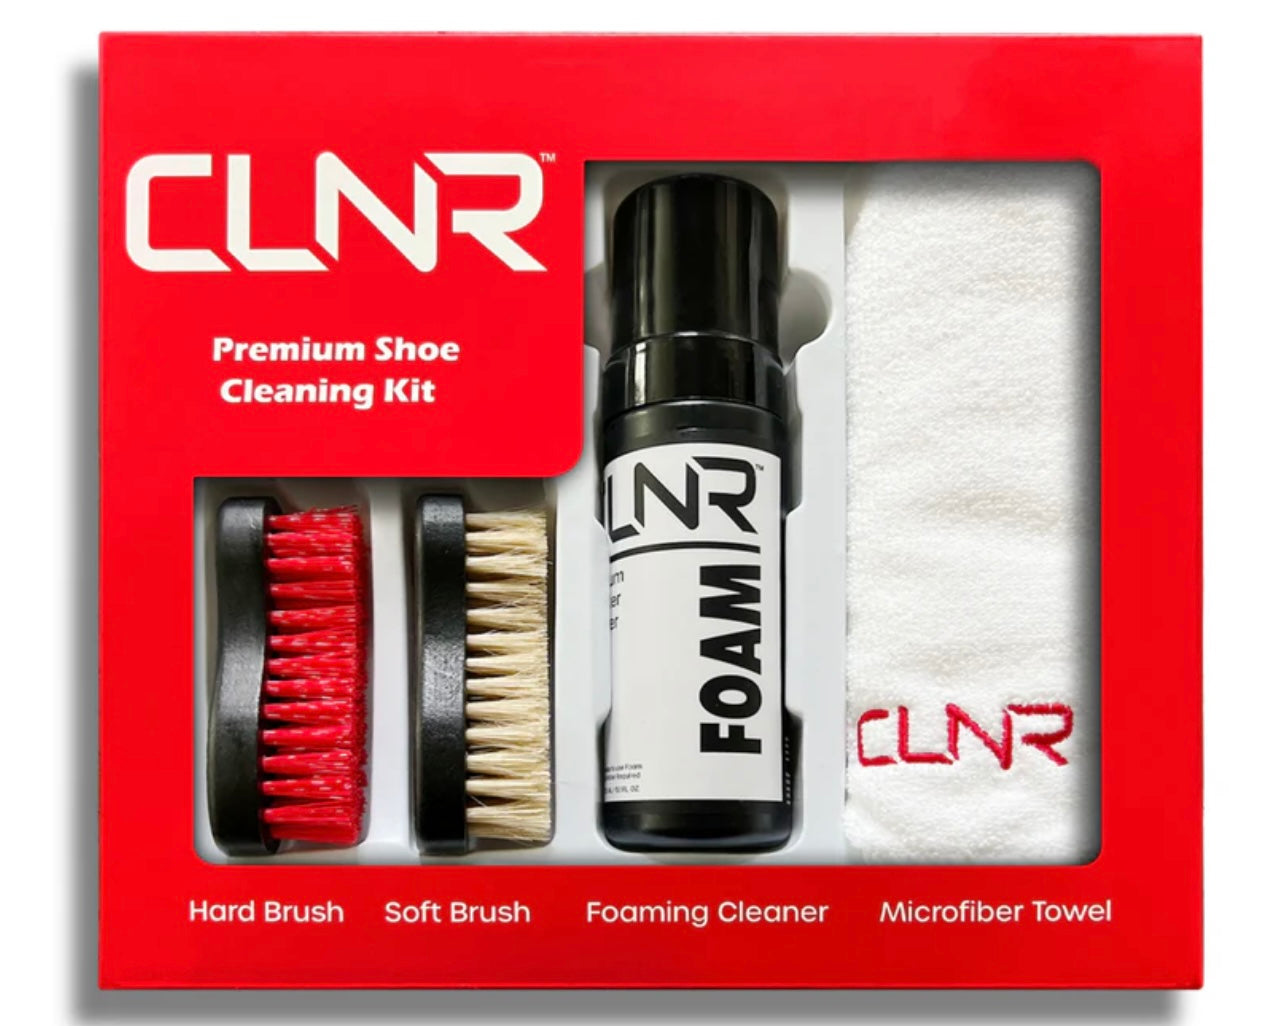 CLNR Premium Shoe Cleaning Kit